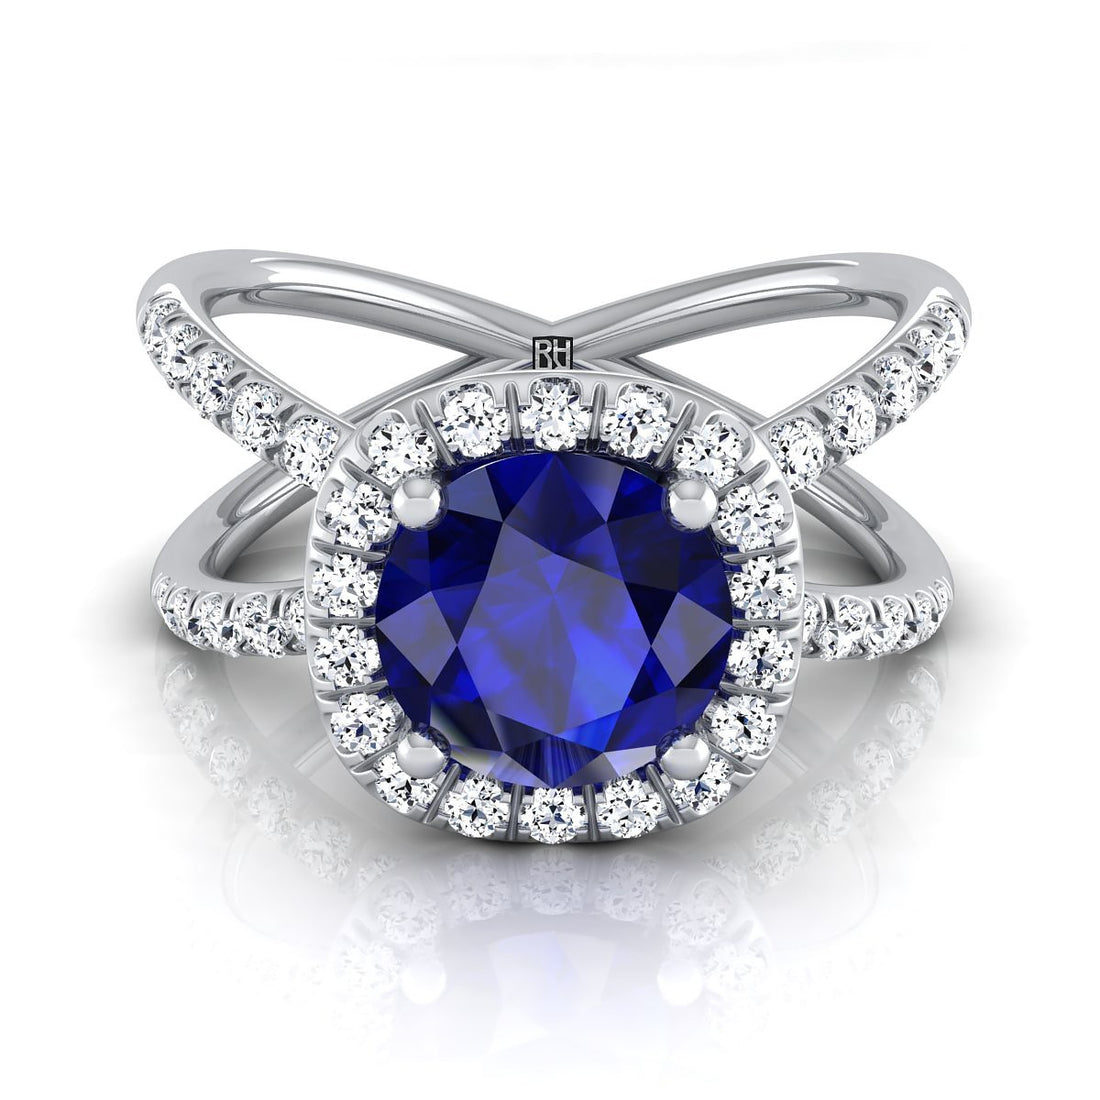 Trending Designs for Diamond Rings with Gemstones